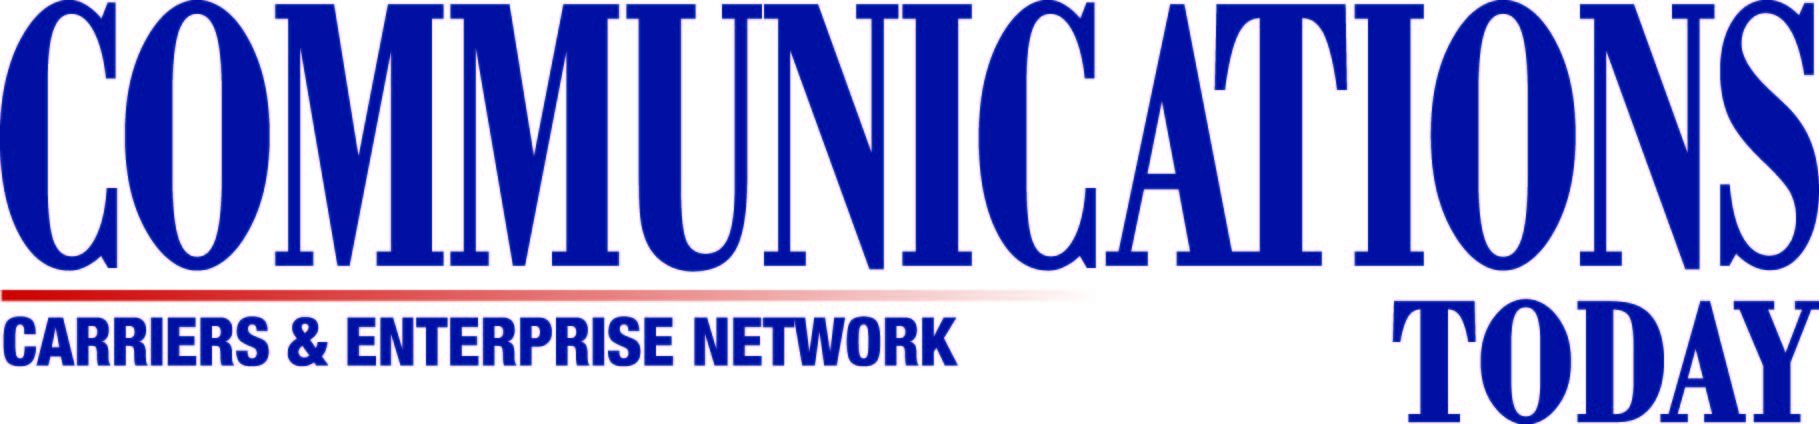 Communication Today logo